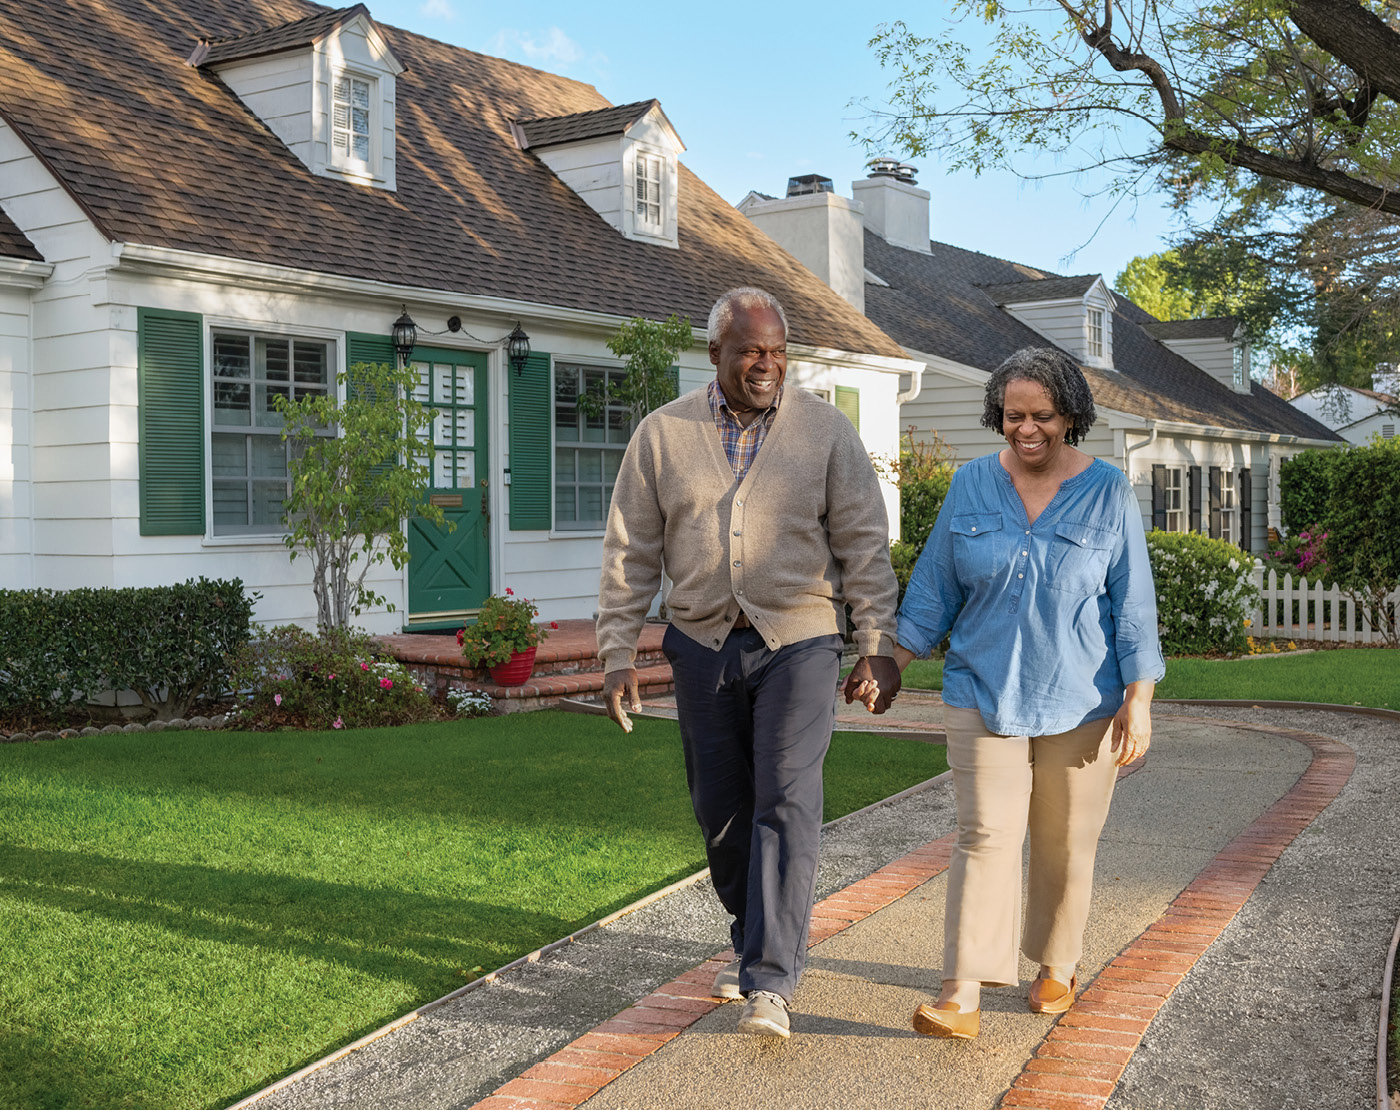 A retired couple takes a walk through their neighborhood